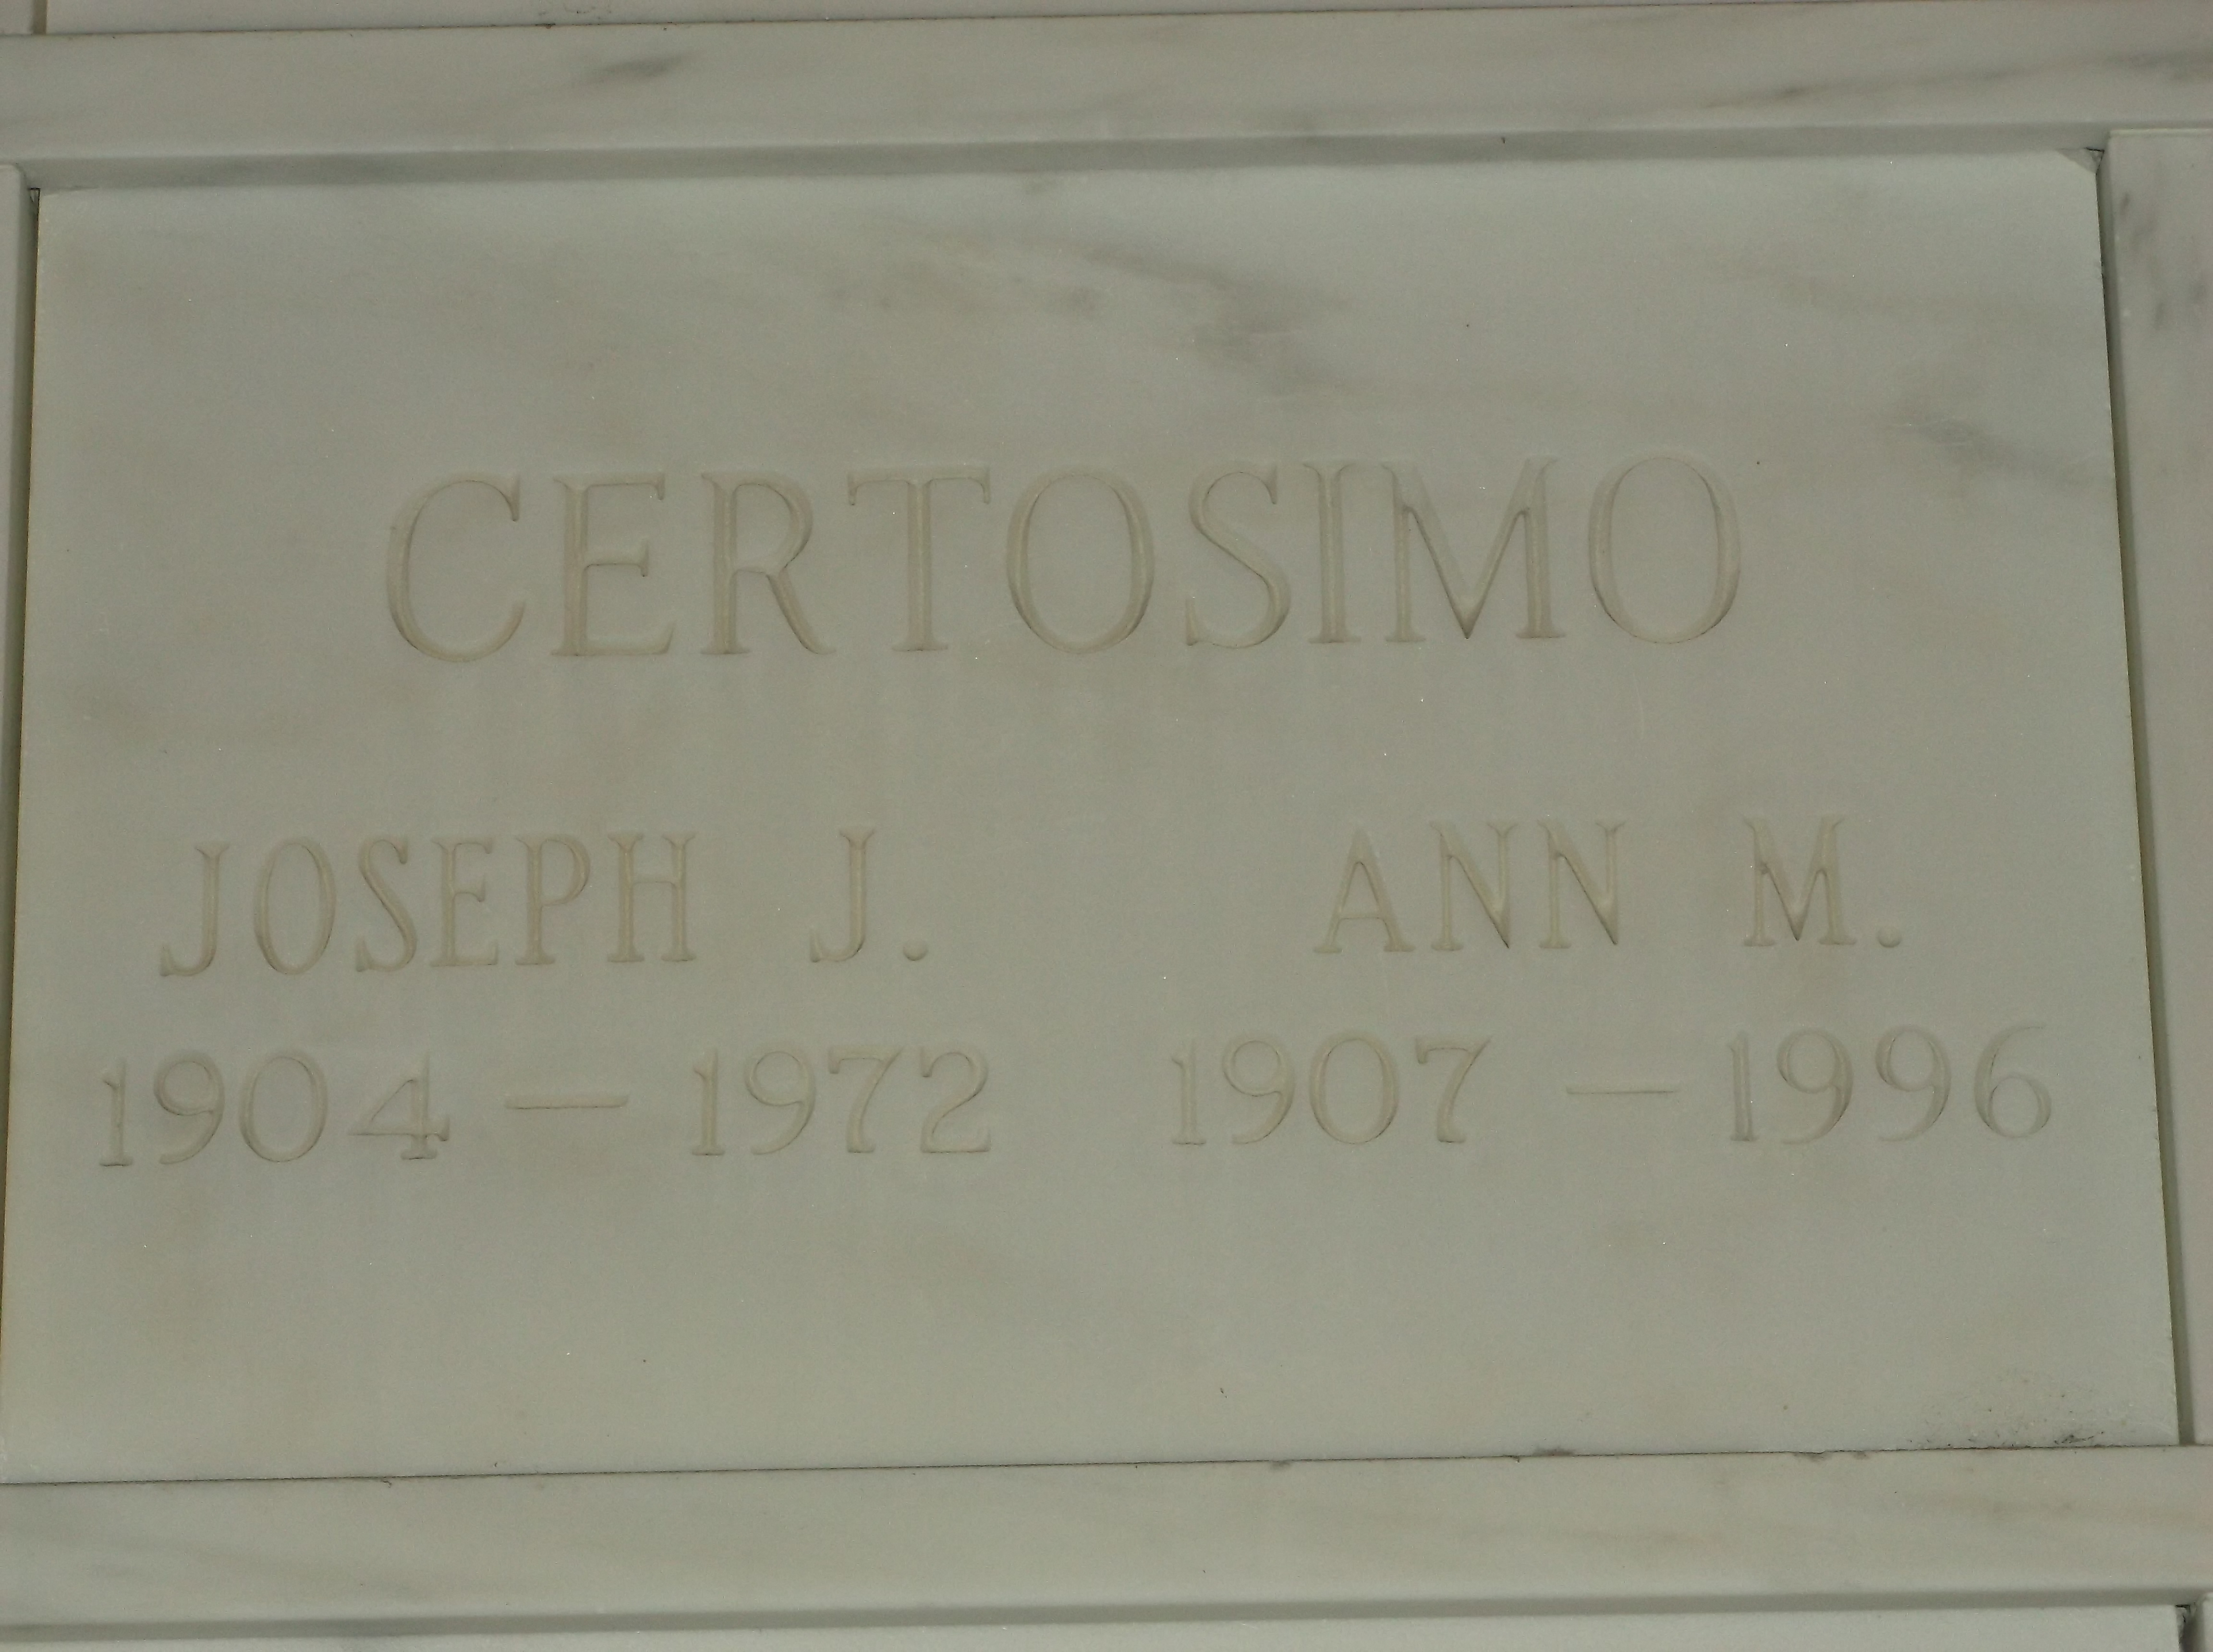 Joseph J Certosimo